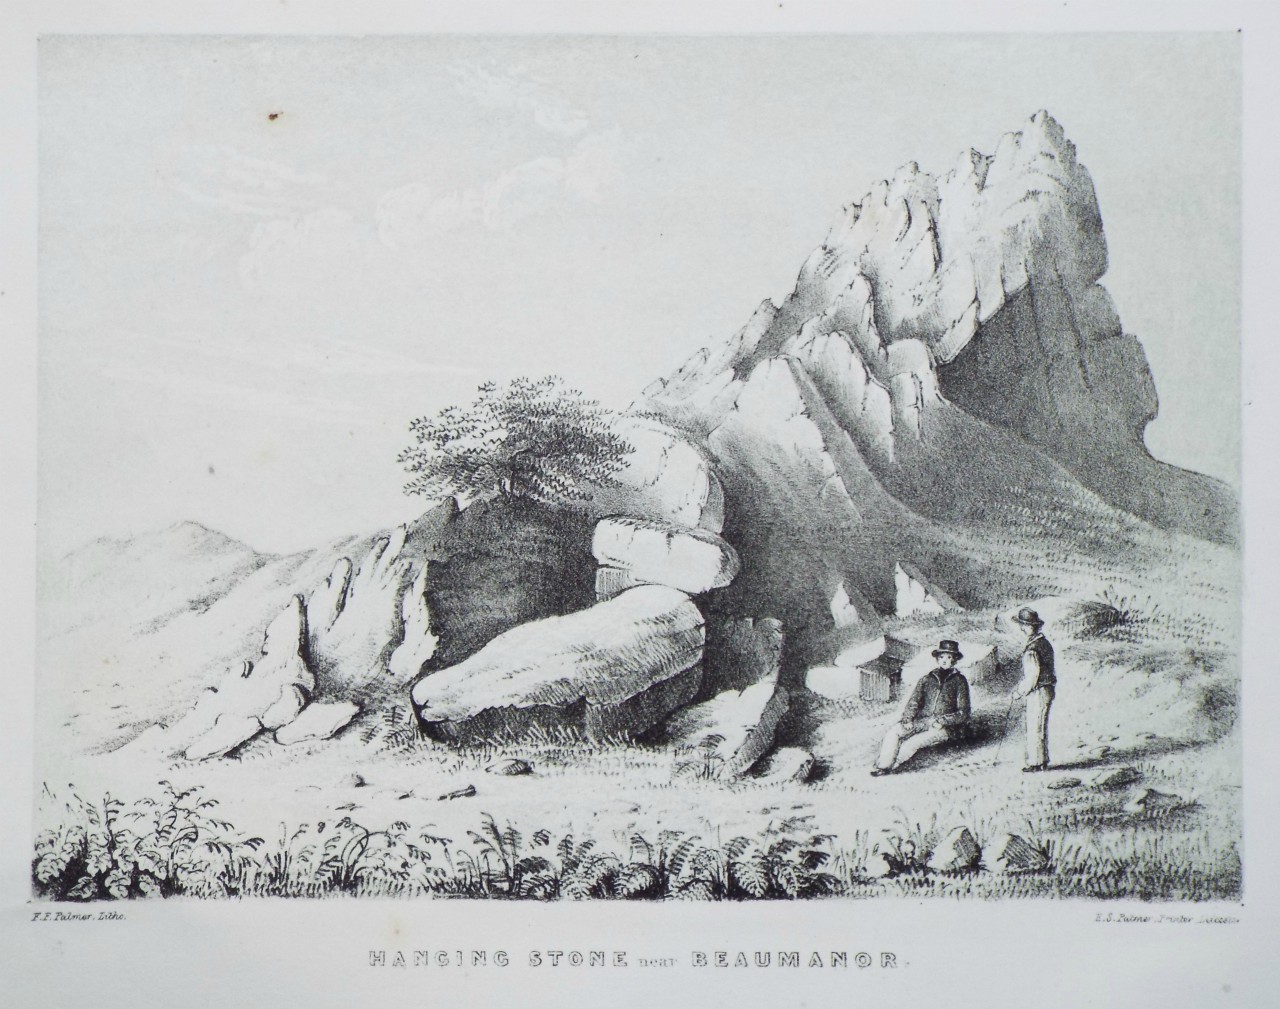 Lithograph - Hanging Rock near Beaumanor. - Palmer